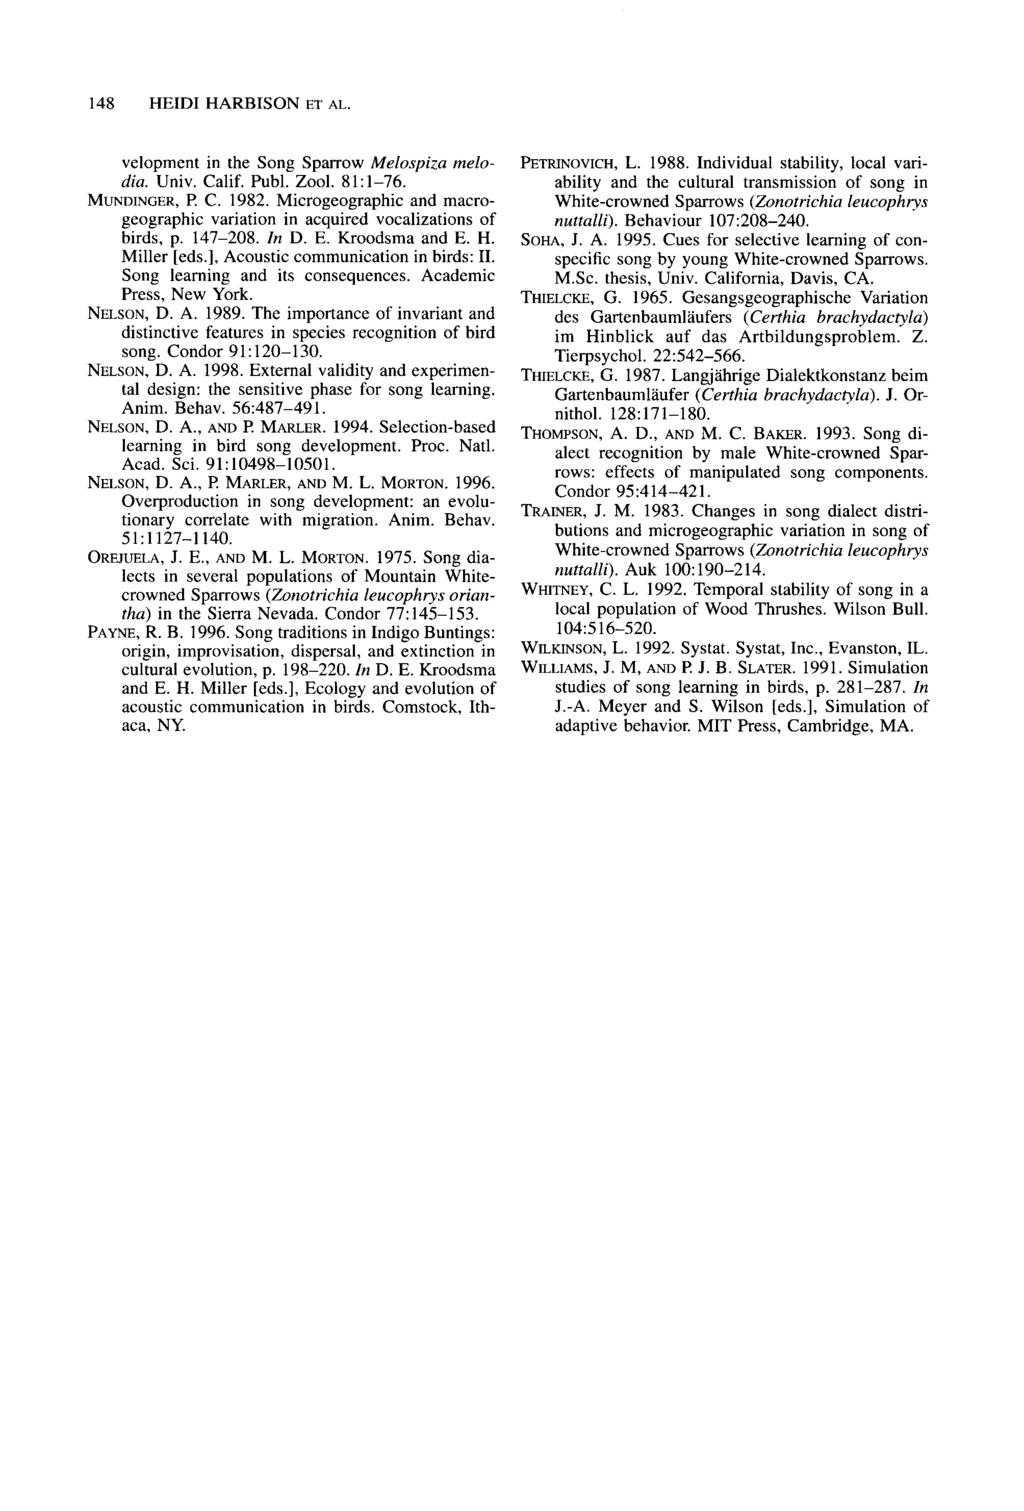 148 HEIDI HARBISON ET AL. velopment in the Song Sparrow Melospiza melo- PETRINOVICH, L. 1988. Individual stability, local varidia. Univ. Calif. Publ. Zool. 81:1-76.